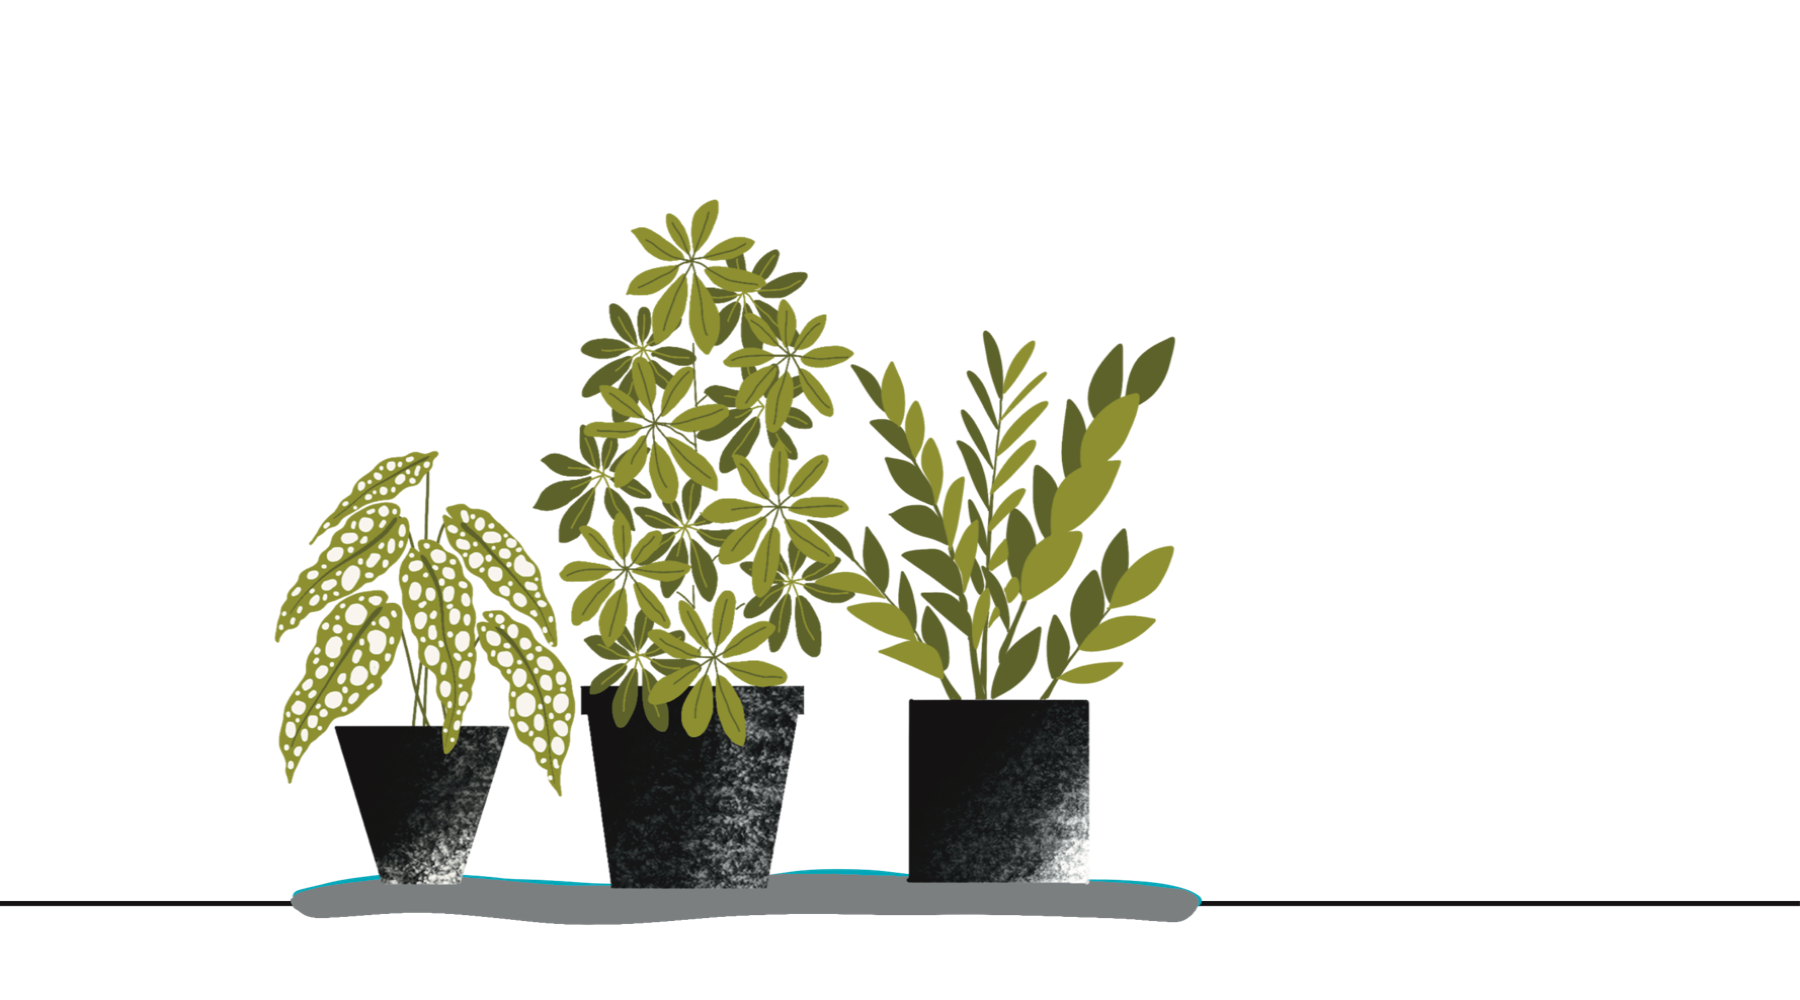 Three plants on a wet towel